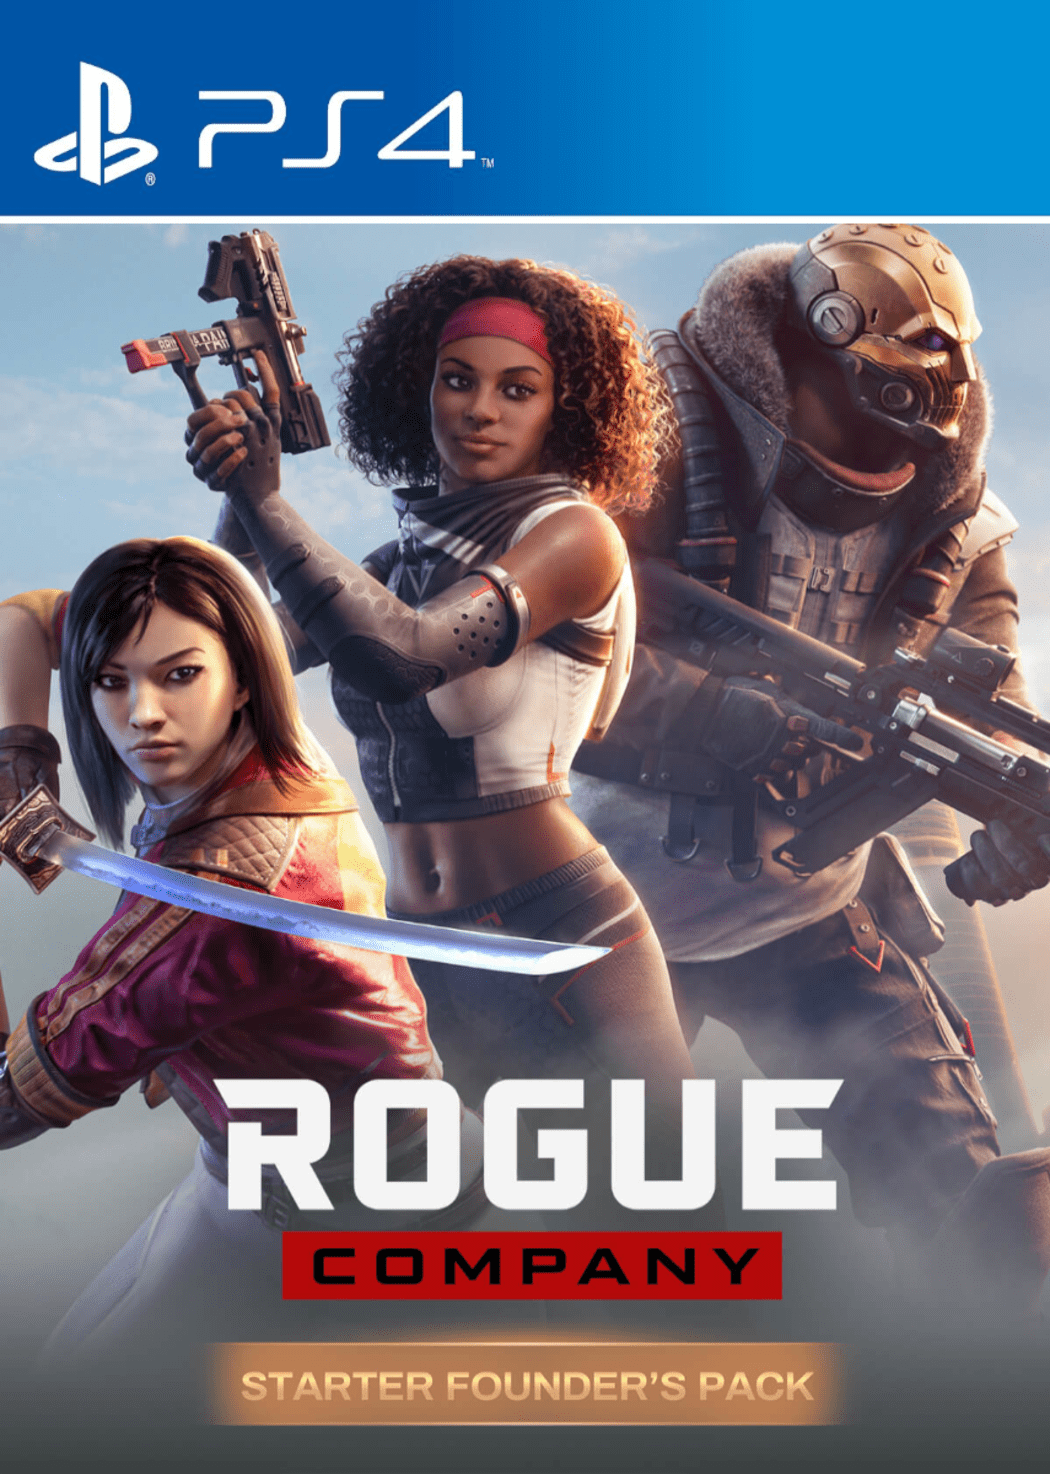 Rogue Company: shooter cooperativo mostra seu gameplay e